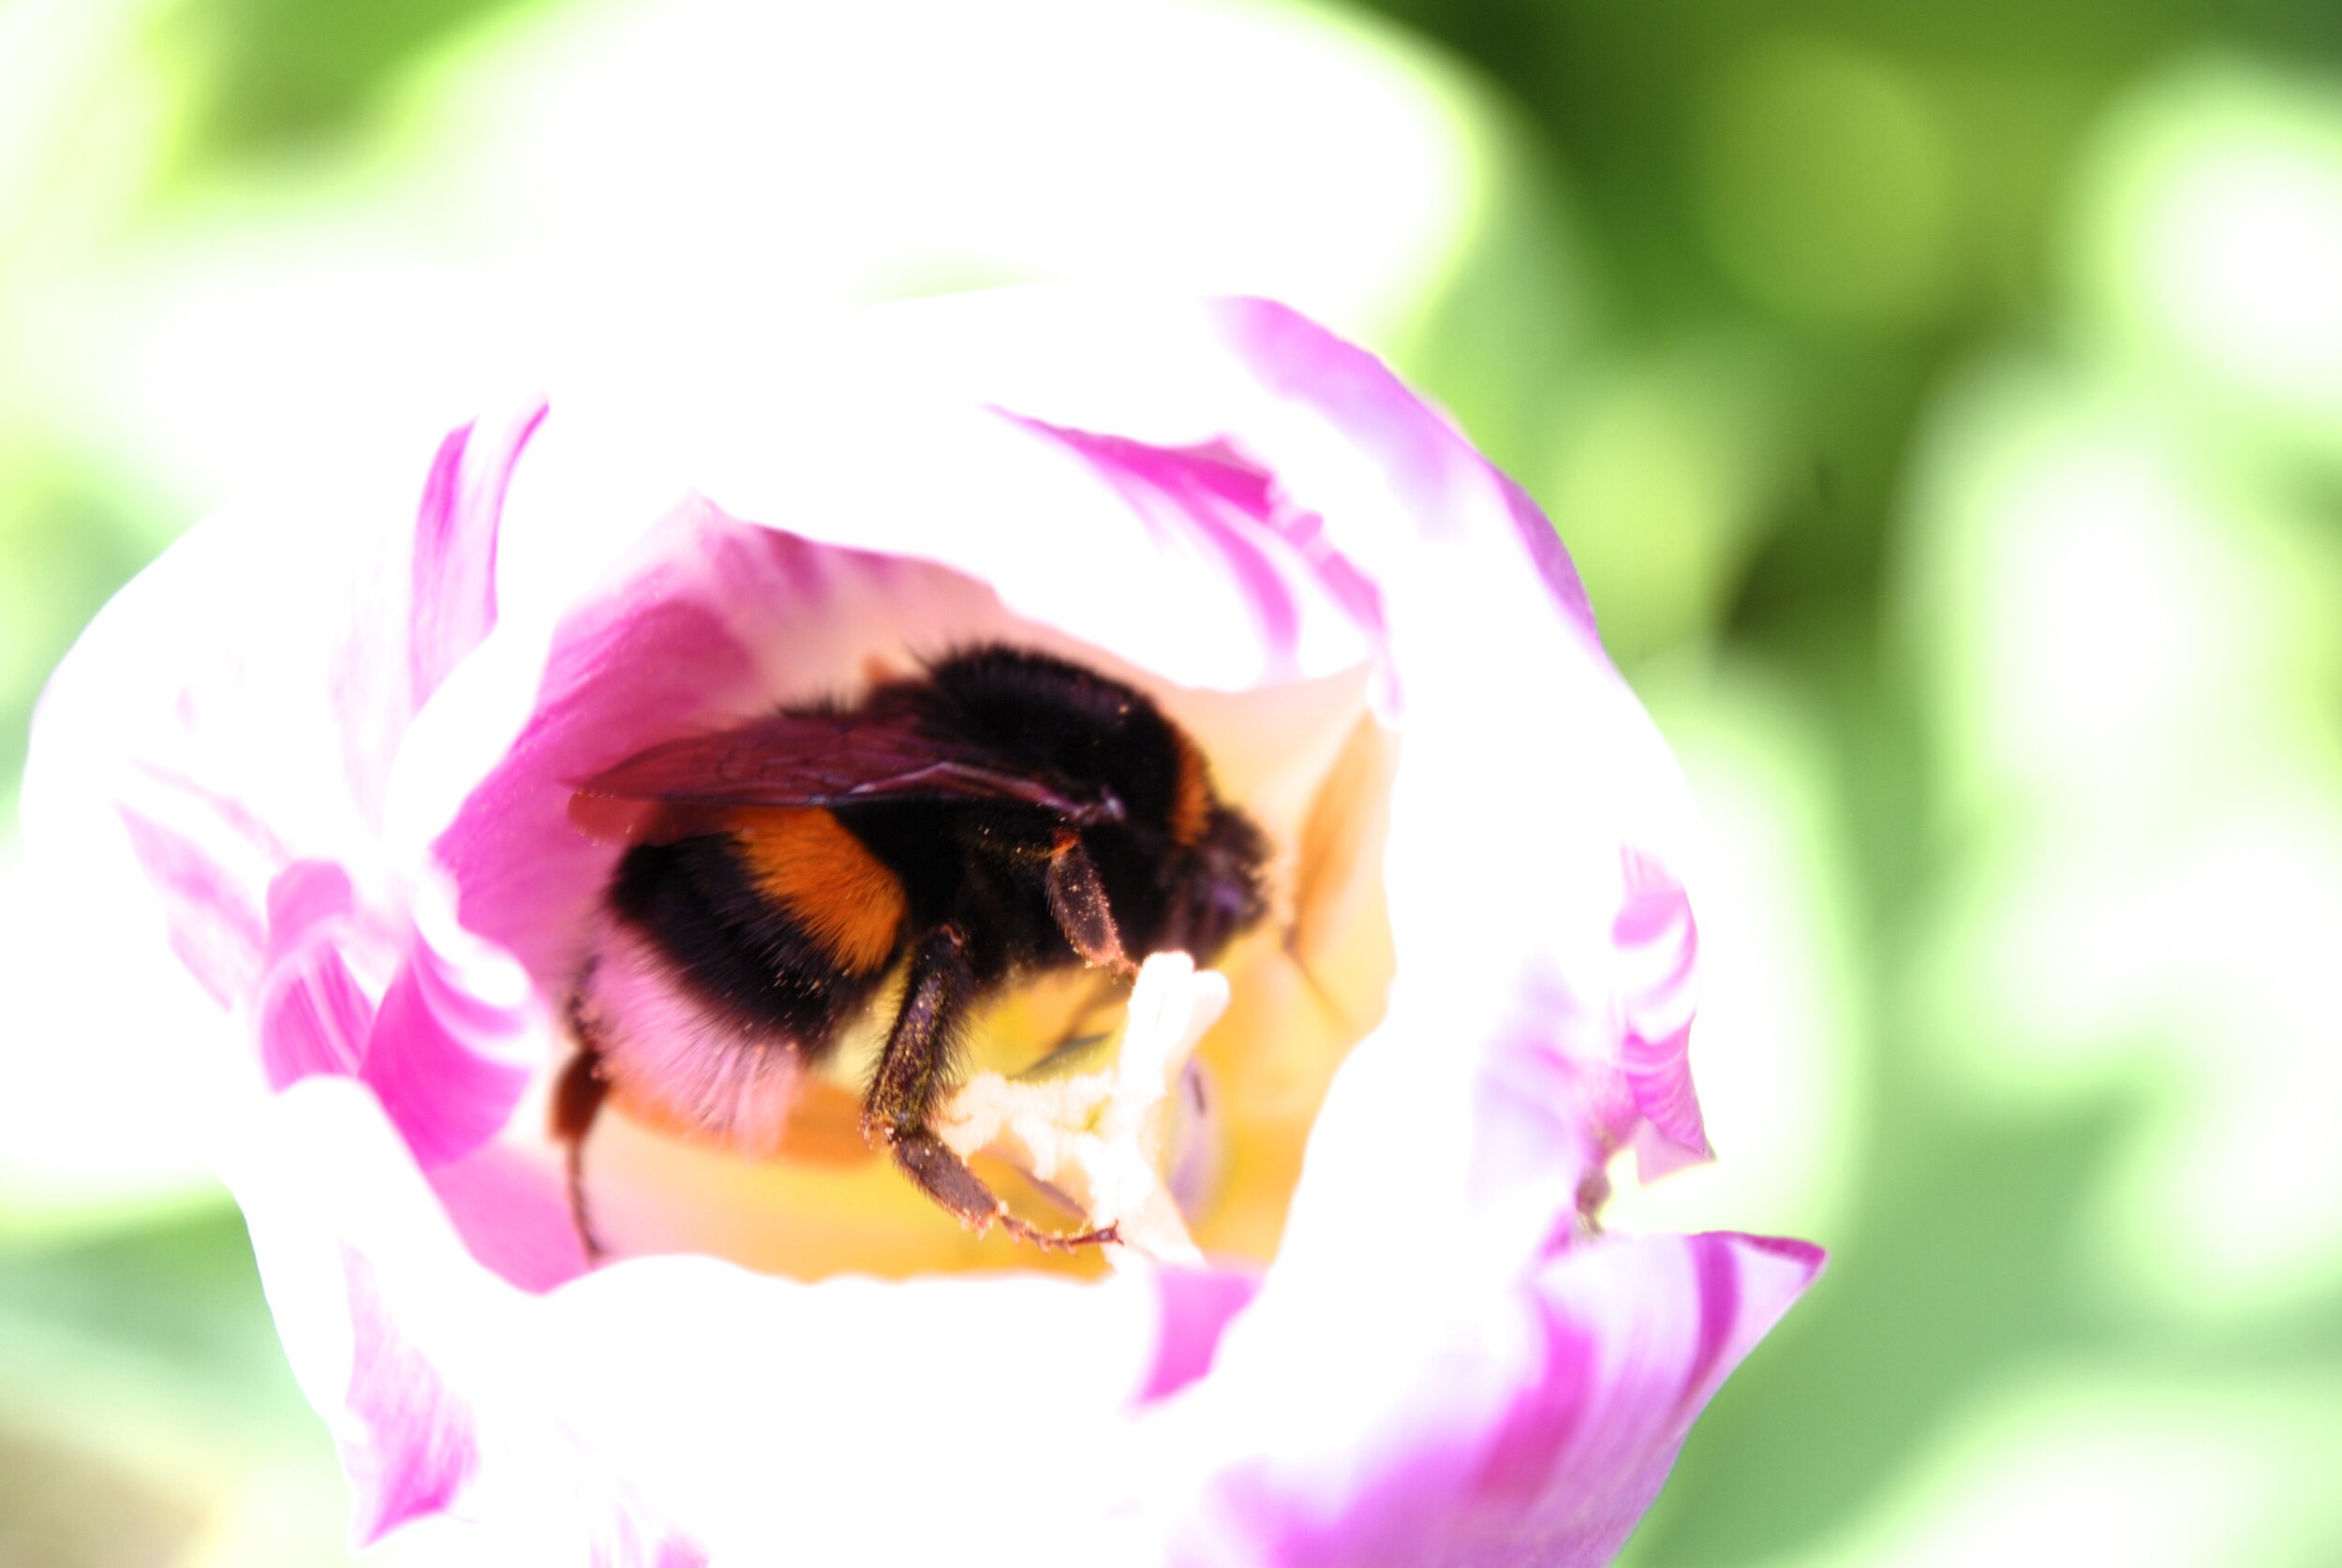   aardhommel / buff-tailed bumblebee /  Bombus terrestris   op  Tulip sp.  